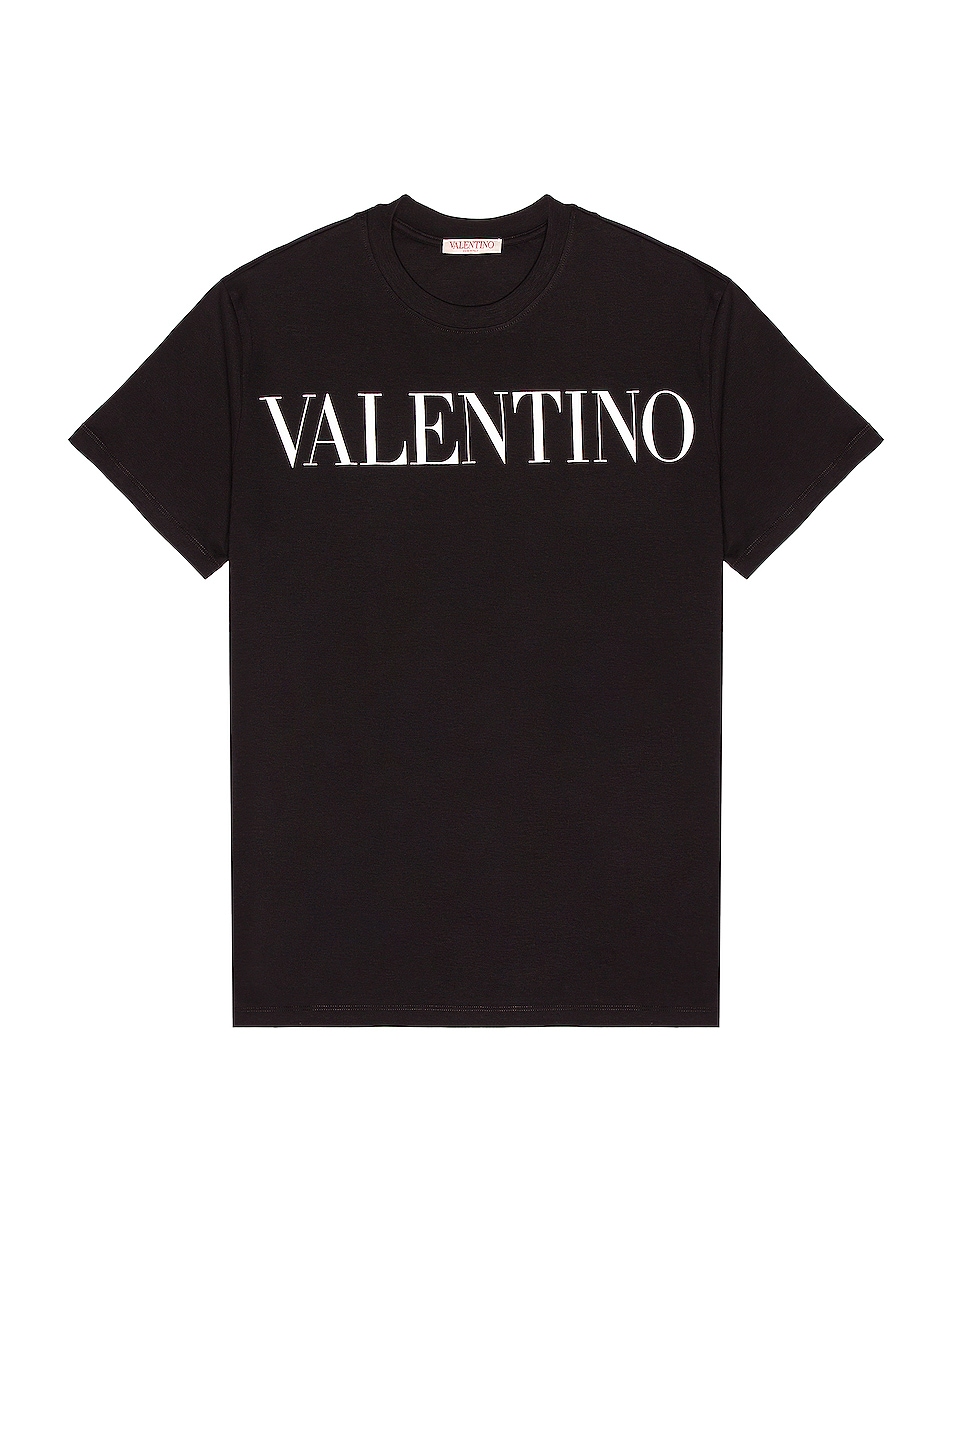 Image 1 of Valentino Logo Tee in Black & White